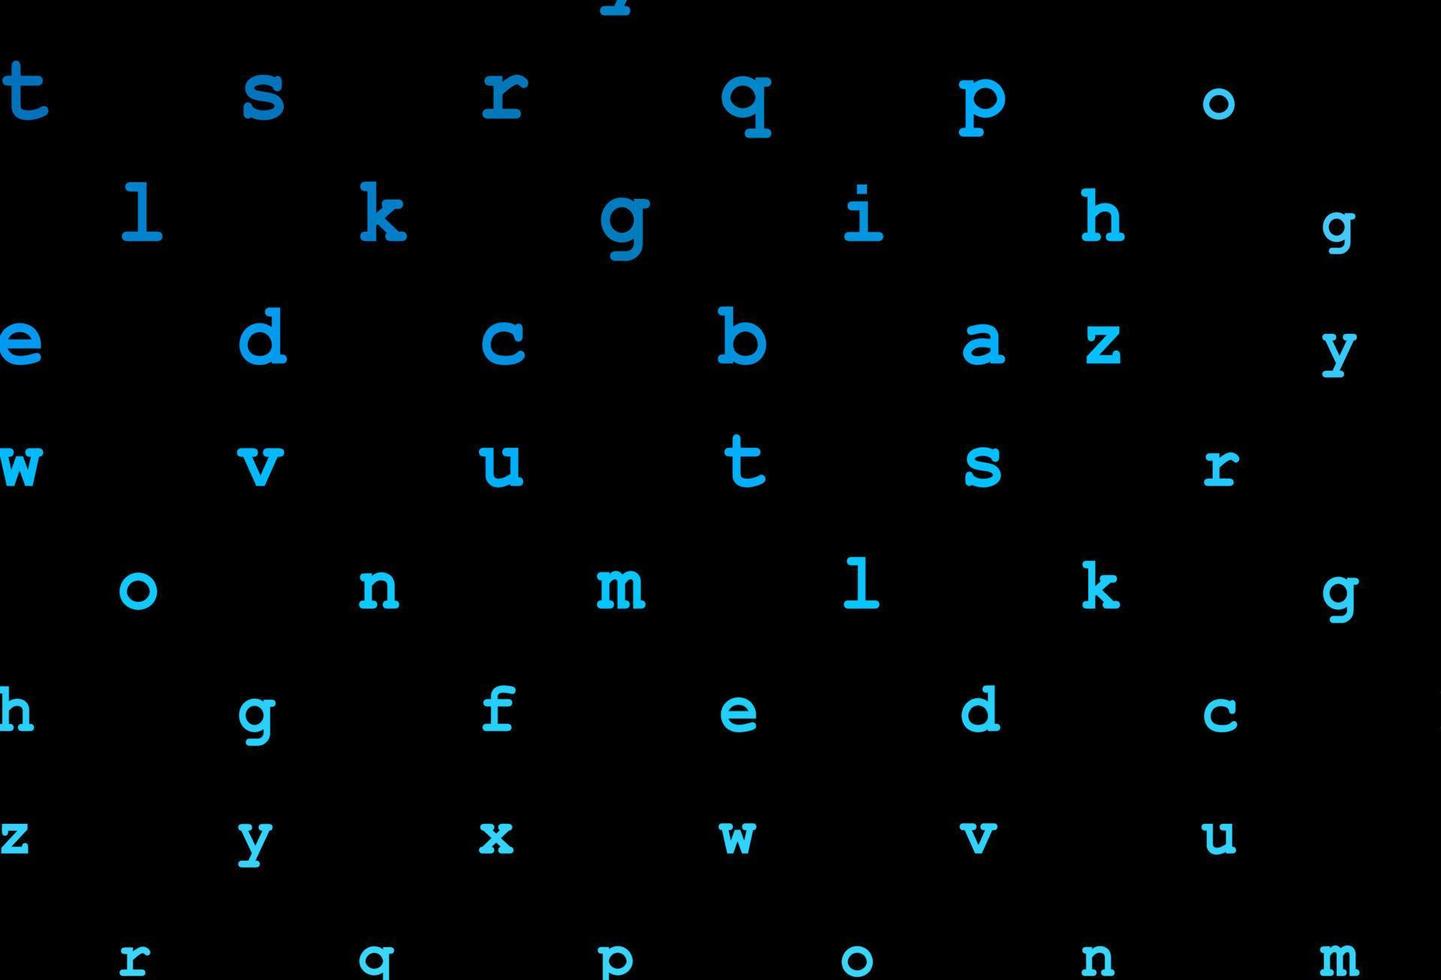 layout de vetor de azul escuro com alfabeto latino.